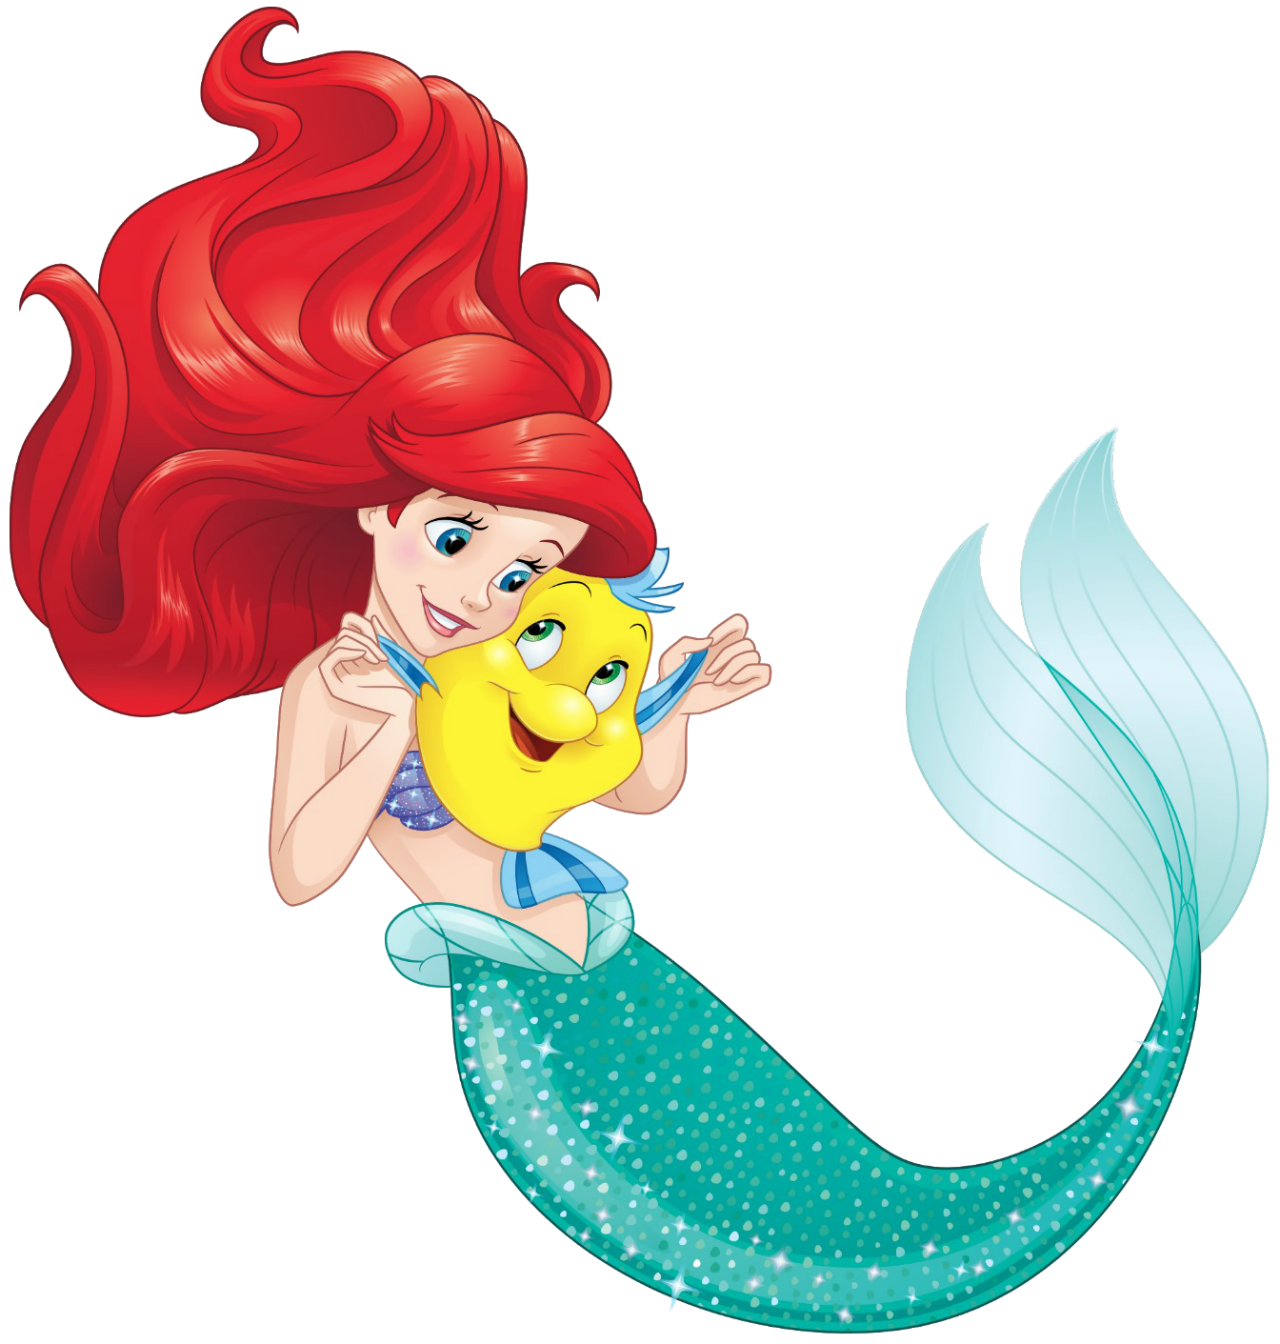 The Little Mermaid - An Iconic Disney Princess